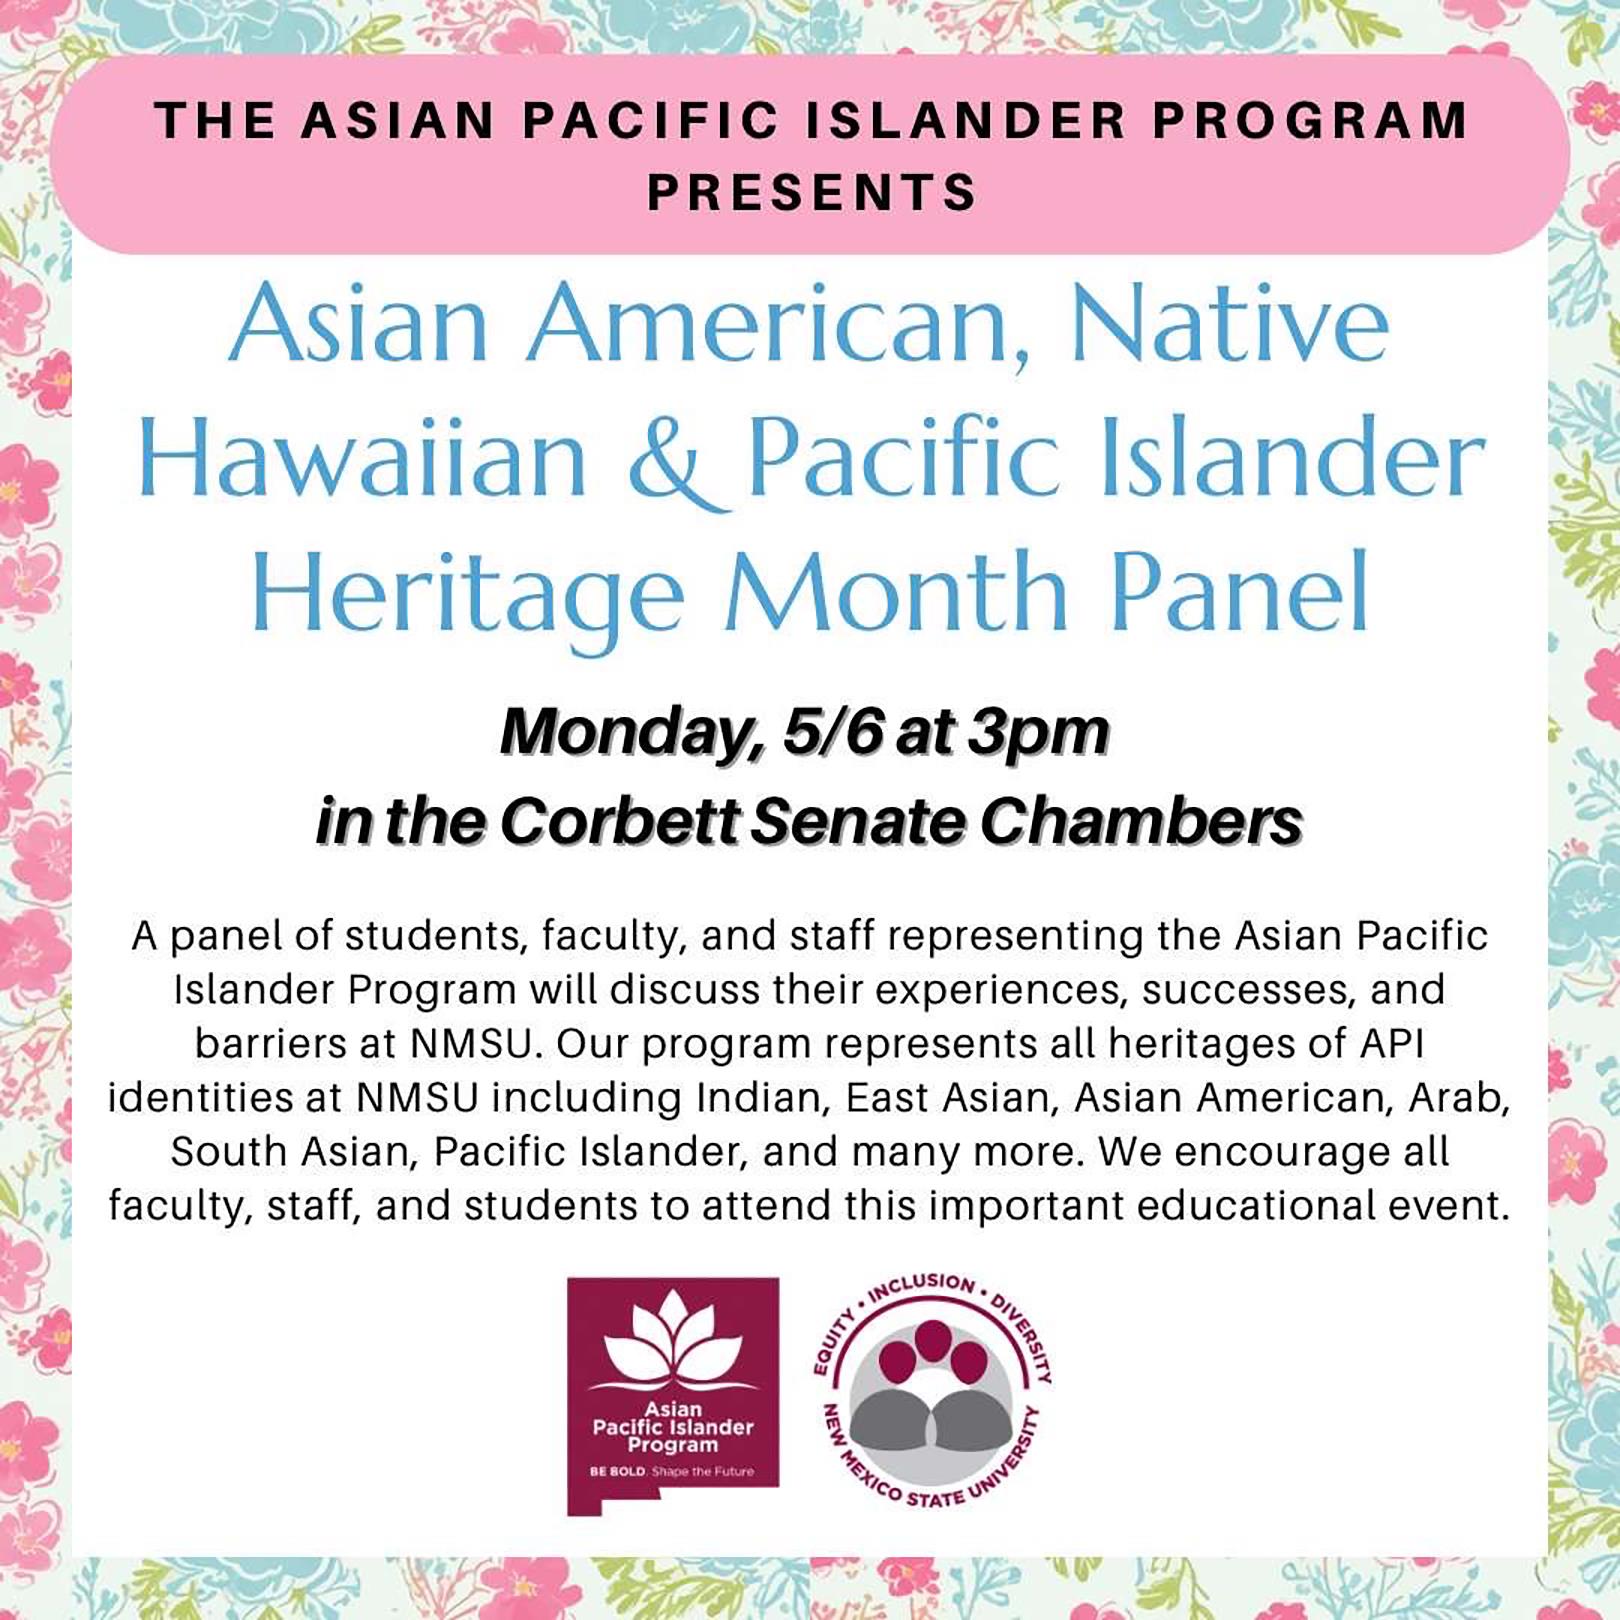 NMSU celebrates Arab American, Asian American, Native Hawaiian/Pacific Islander communities